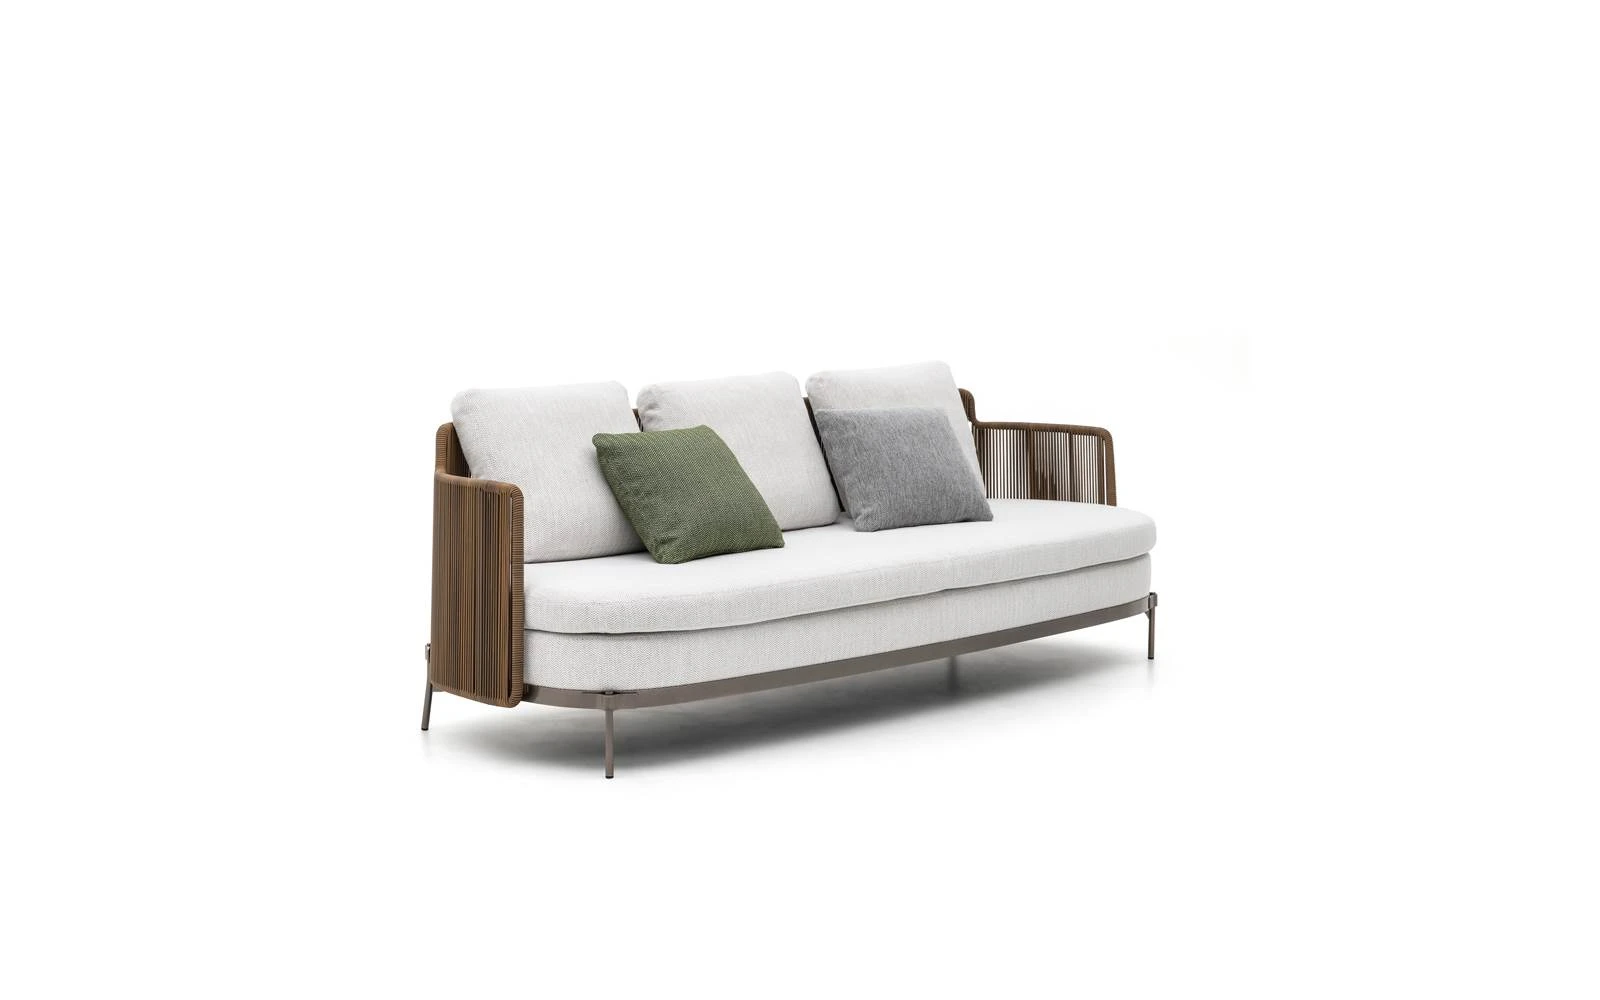 Outdoor furniture Modern design outdoor Garden rattan sofa patio furniture wicker outdoor luxury sofa sets